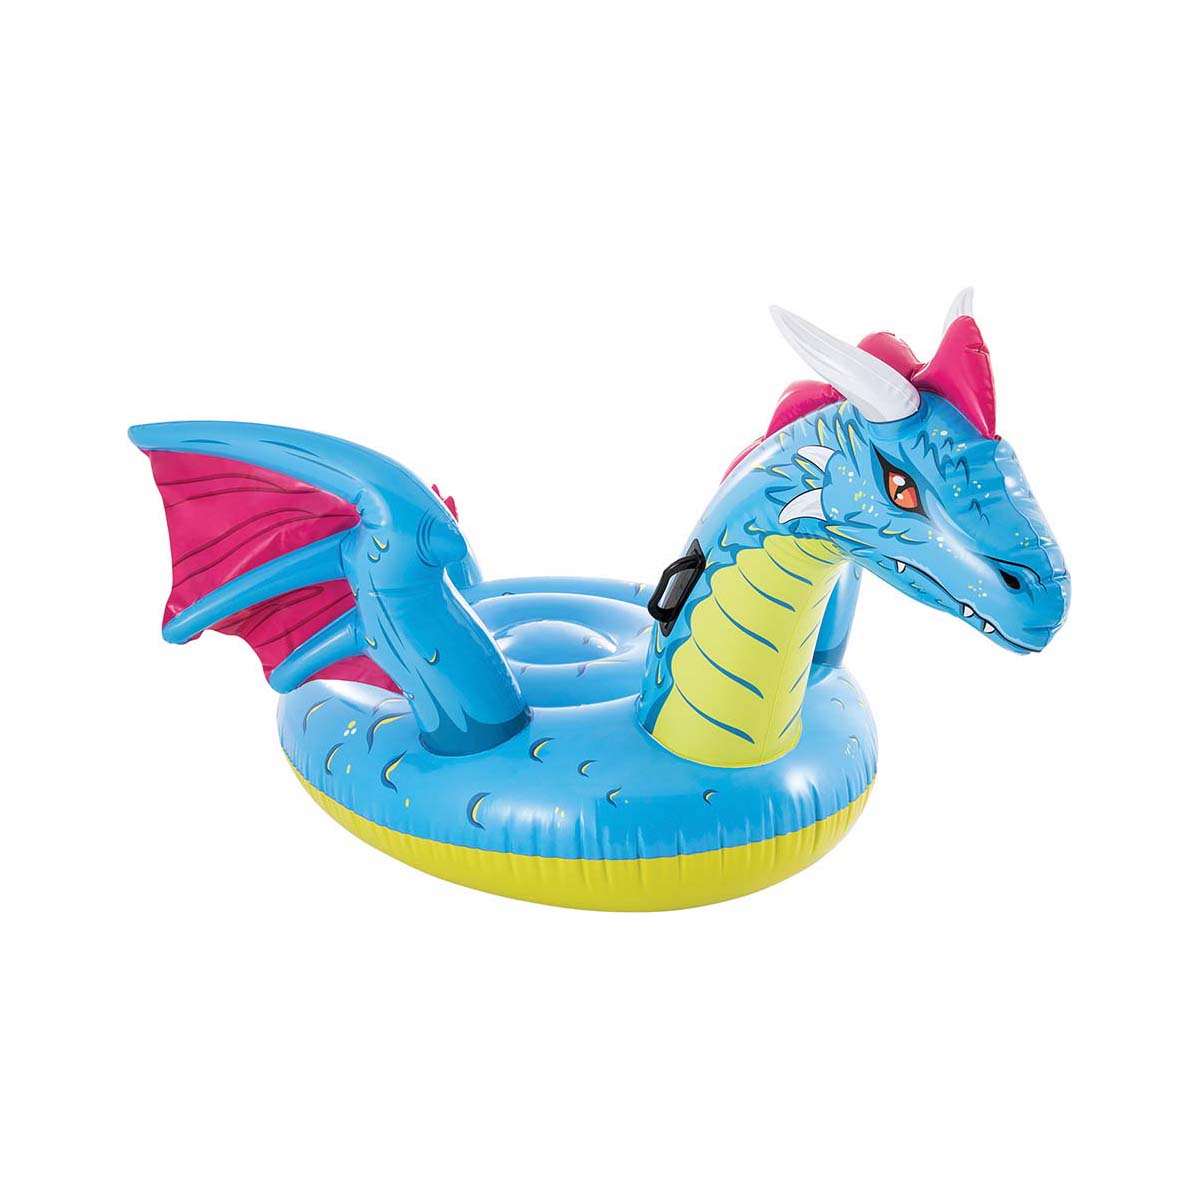 Intex Inflatable Ride On Dragon